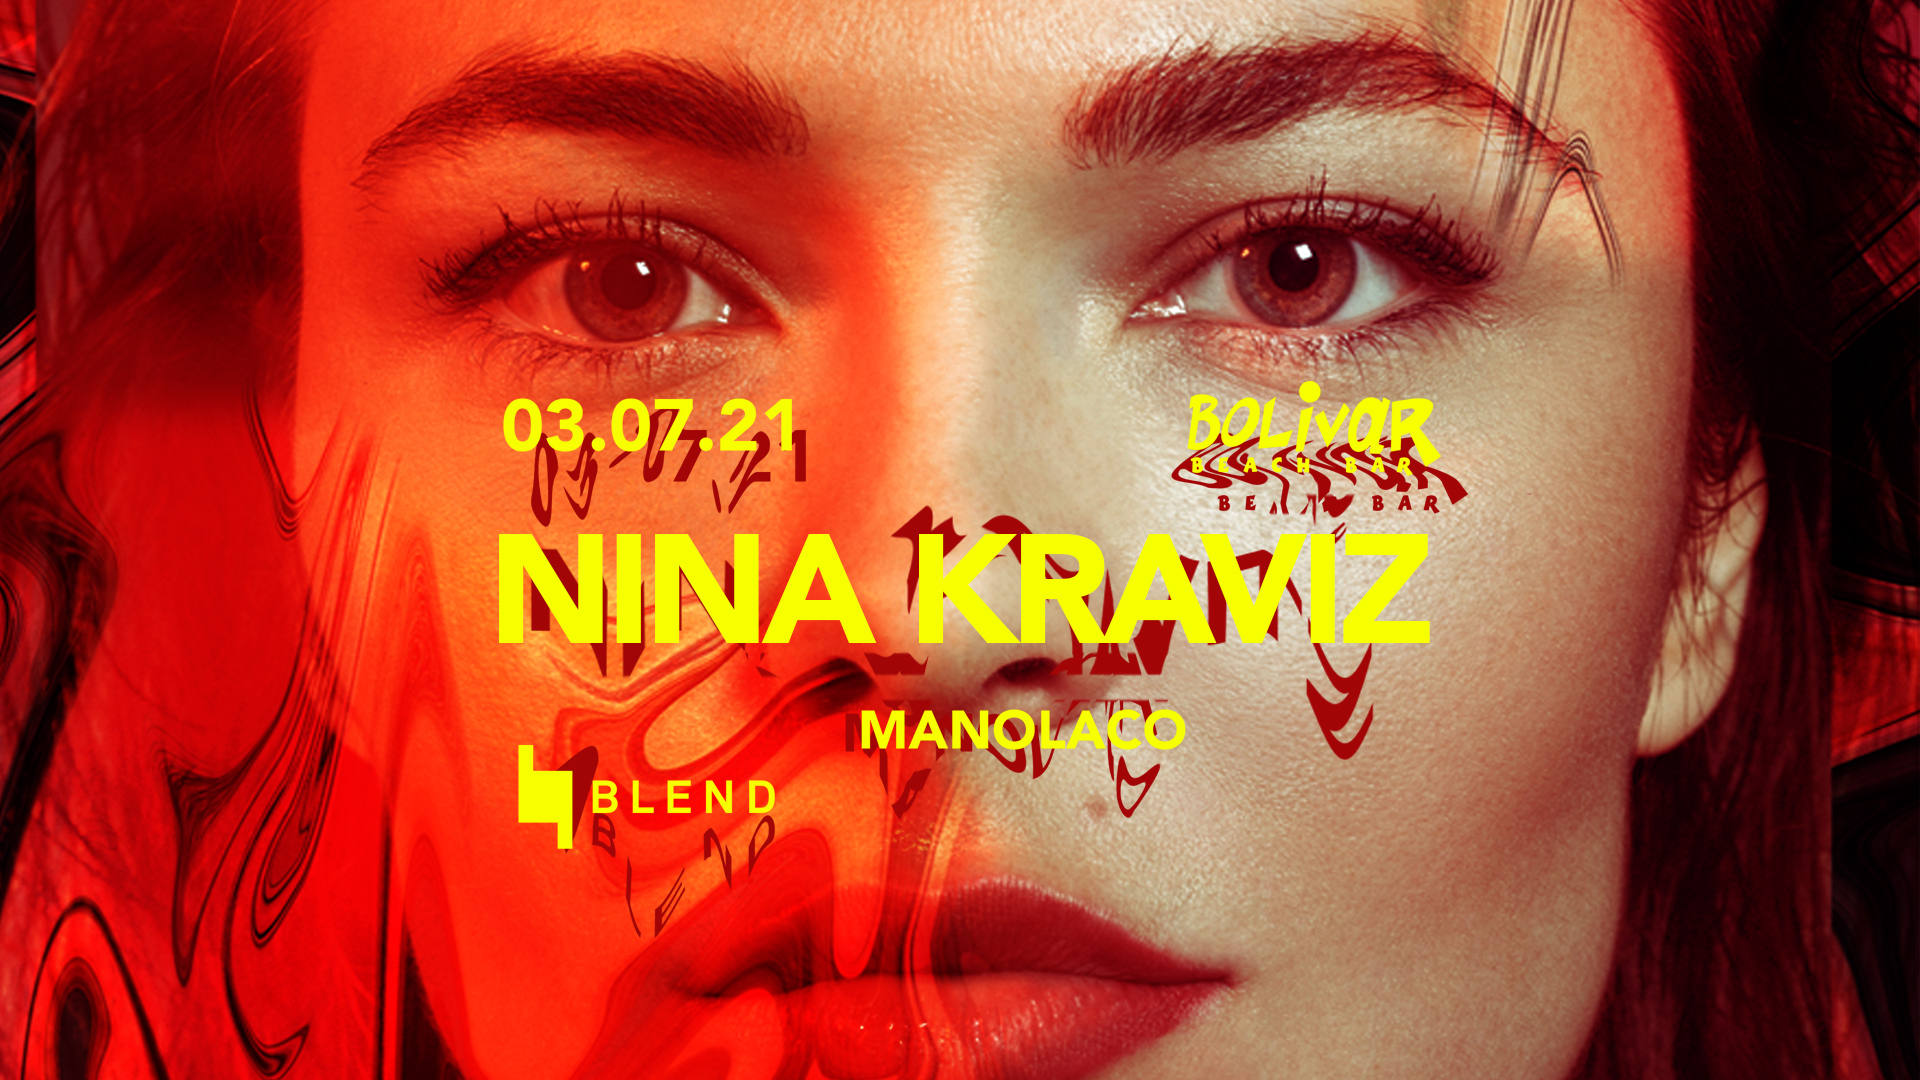 Blend with Nina Kraviz: Σάββατο 3 Ιουλίου στο Bolivar